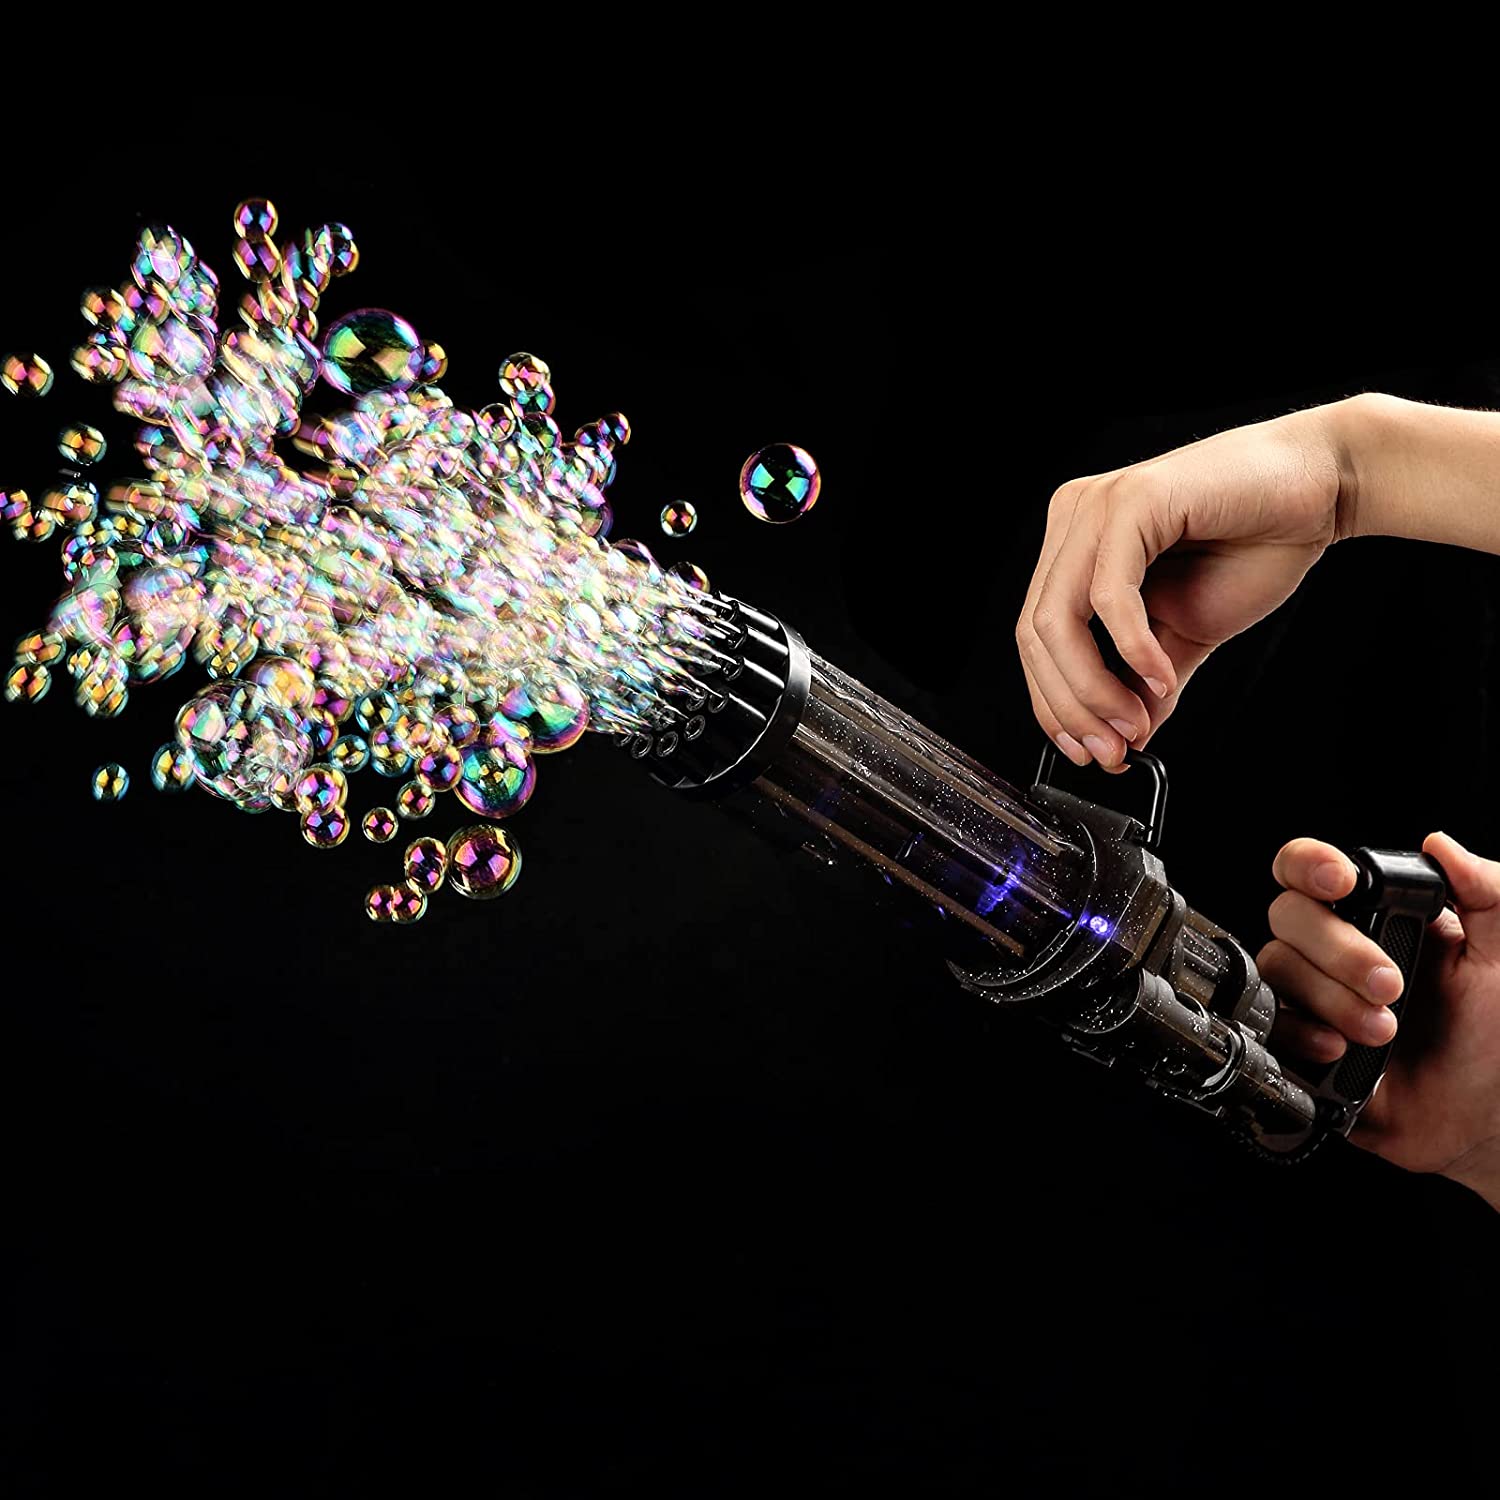 21 Bubble Machine Gun Bubble Maker For Outdoor Kids Play Games